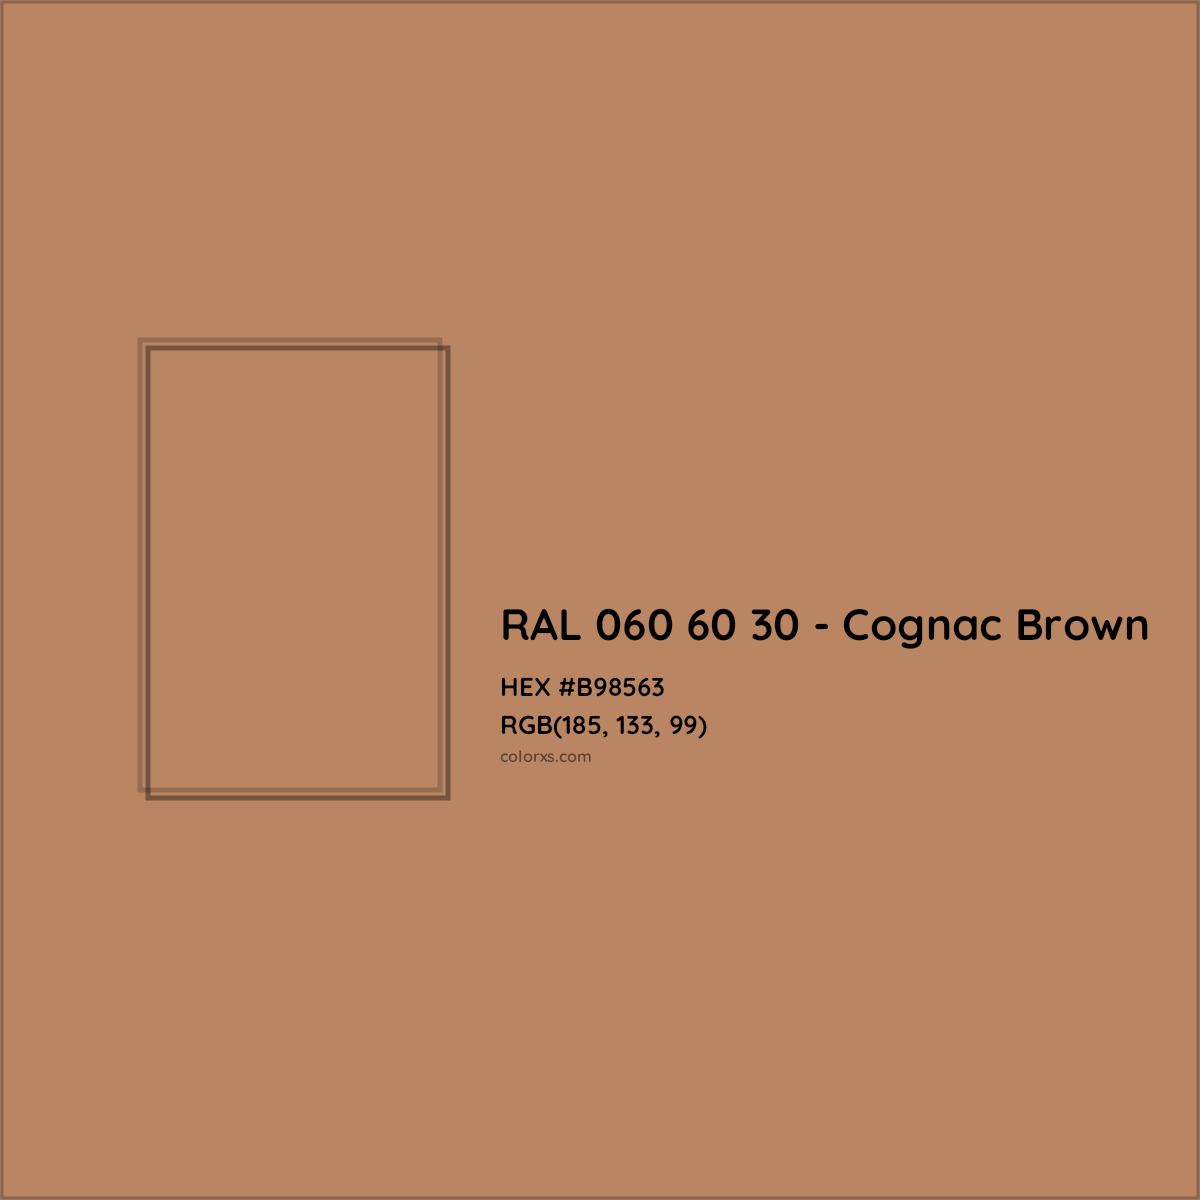 HEX #B98563 RAL 060 60 30 - Cognac Brown CMS RAL Design - Color Code